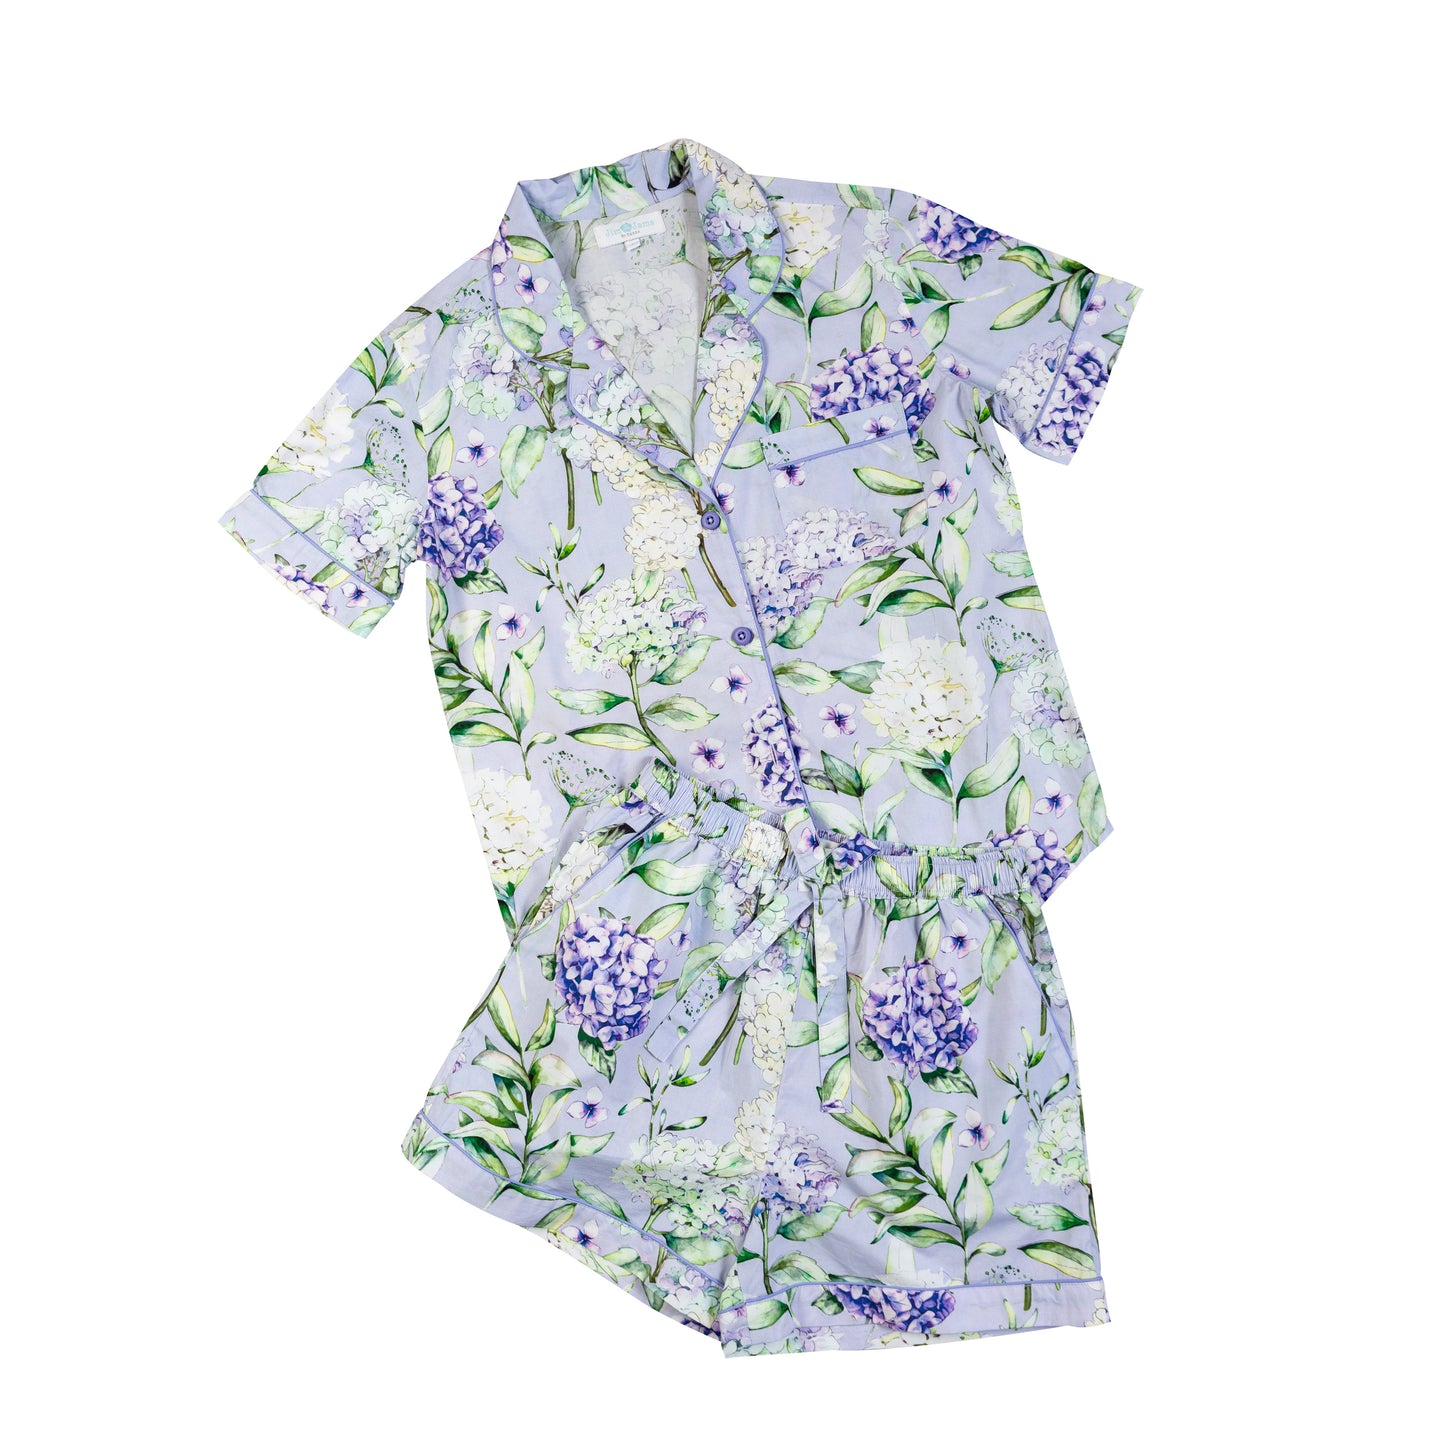 Lilac Hydrangea Short Pyjamas